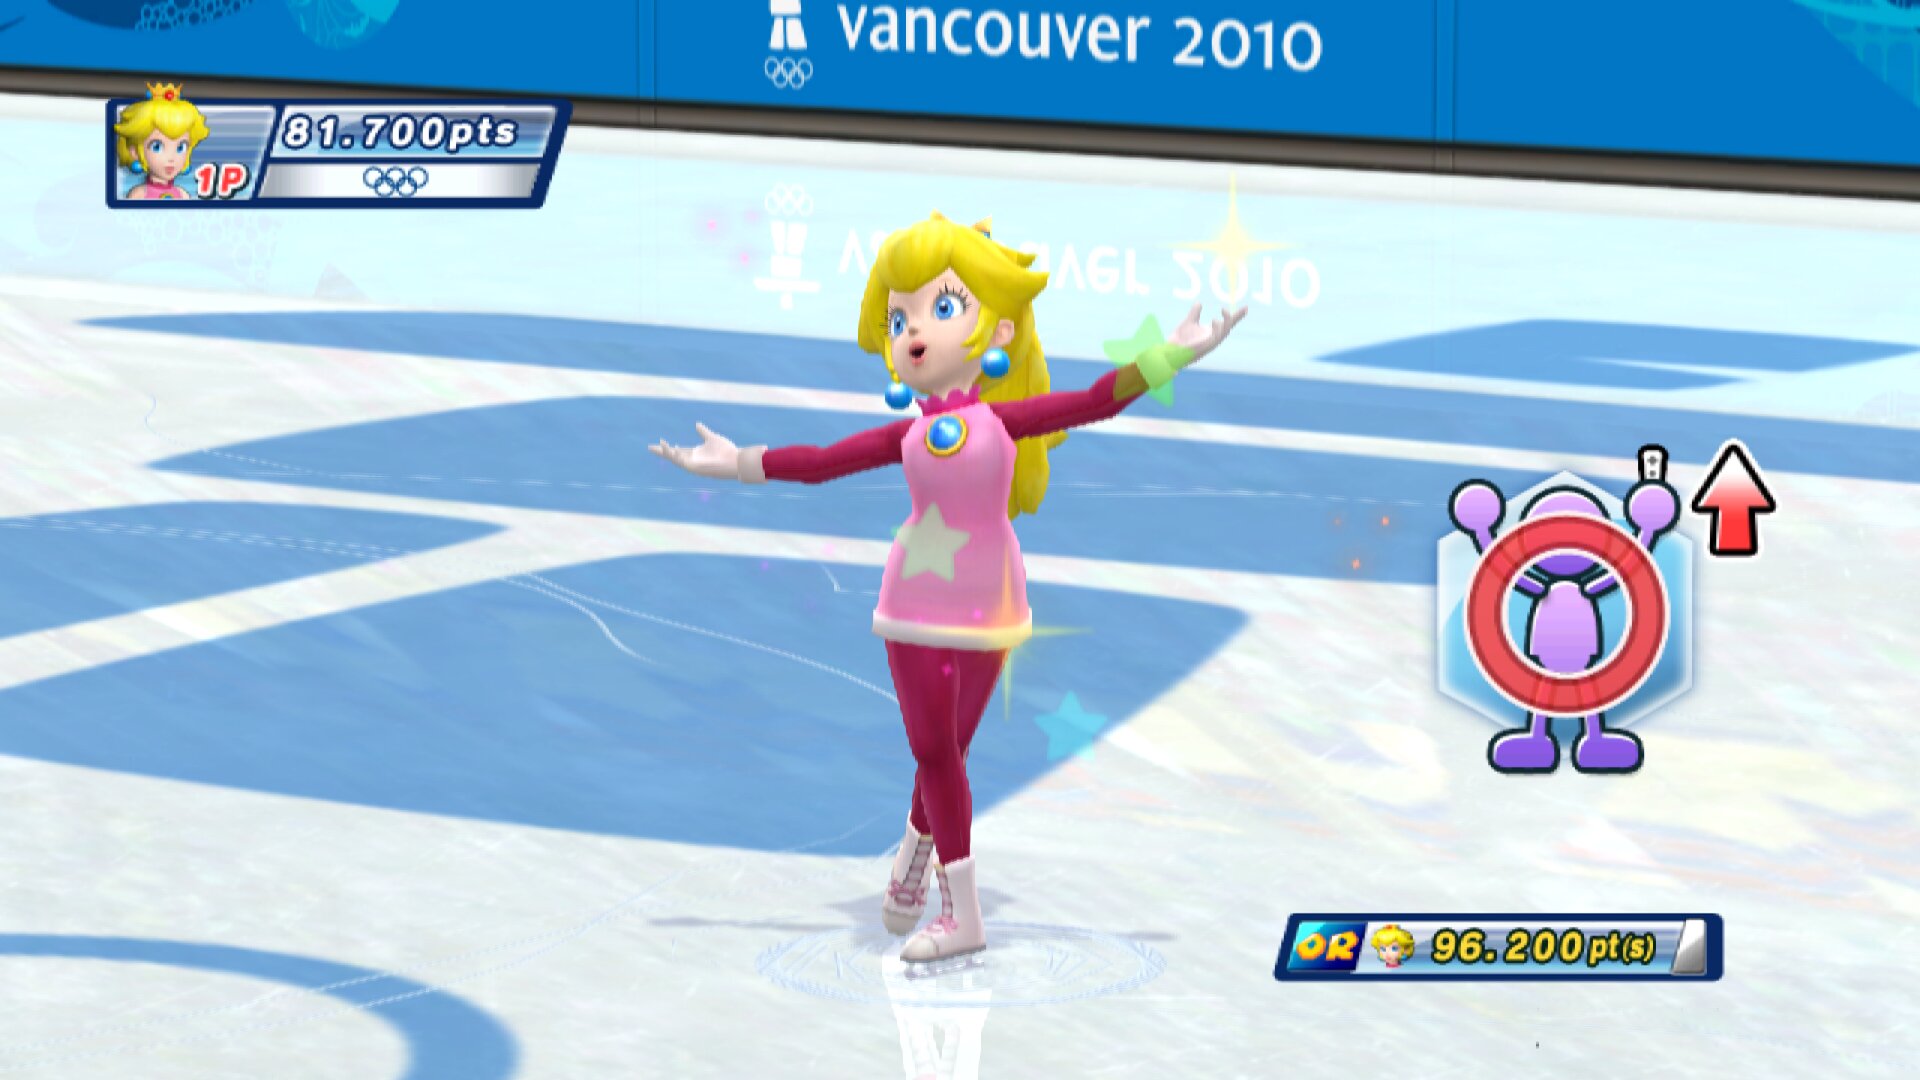 Mario & Sonic at the Sochi 2014 Olympic Winter Games - Meus Jogos